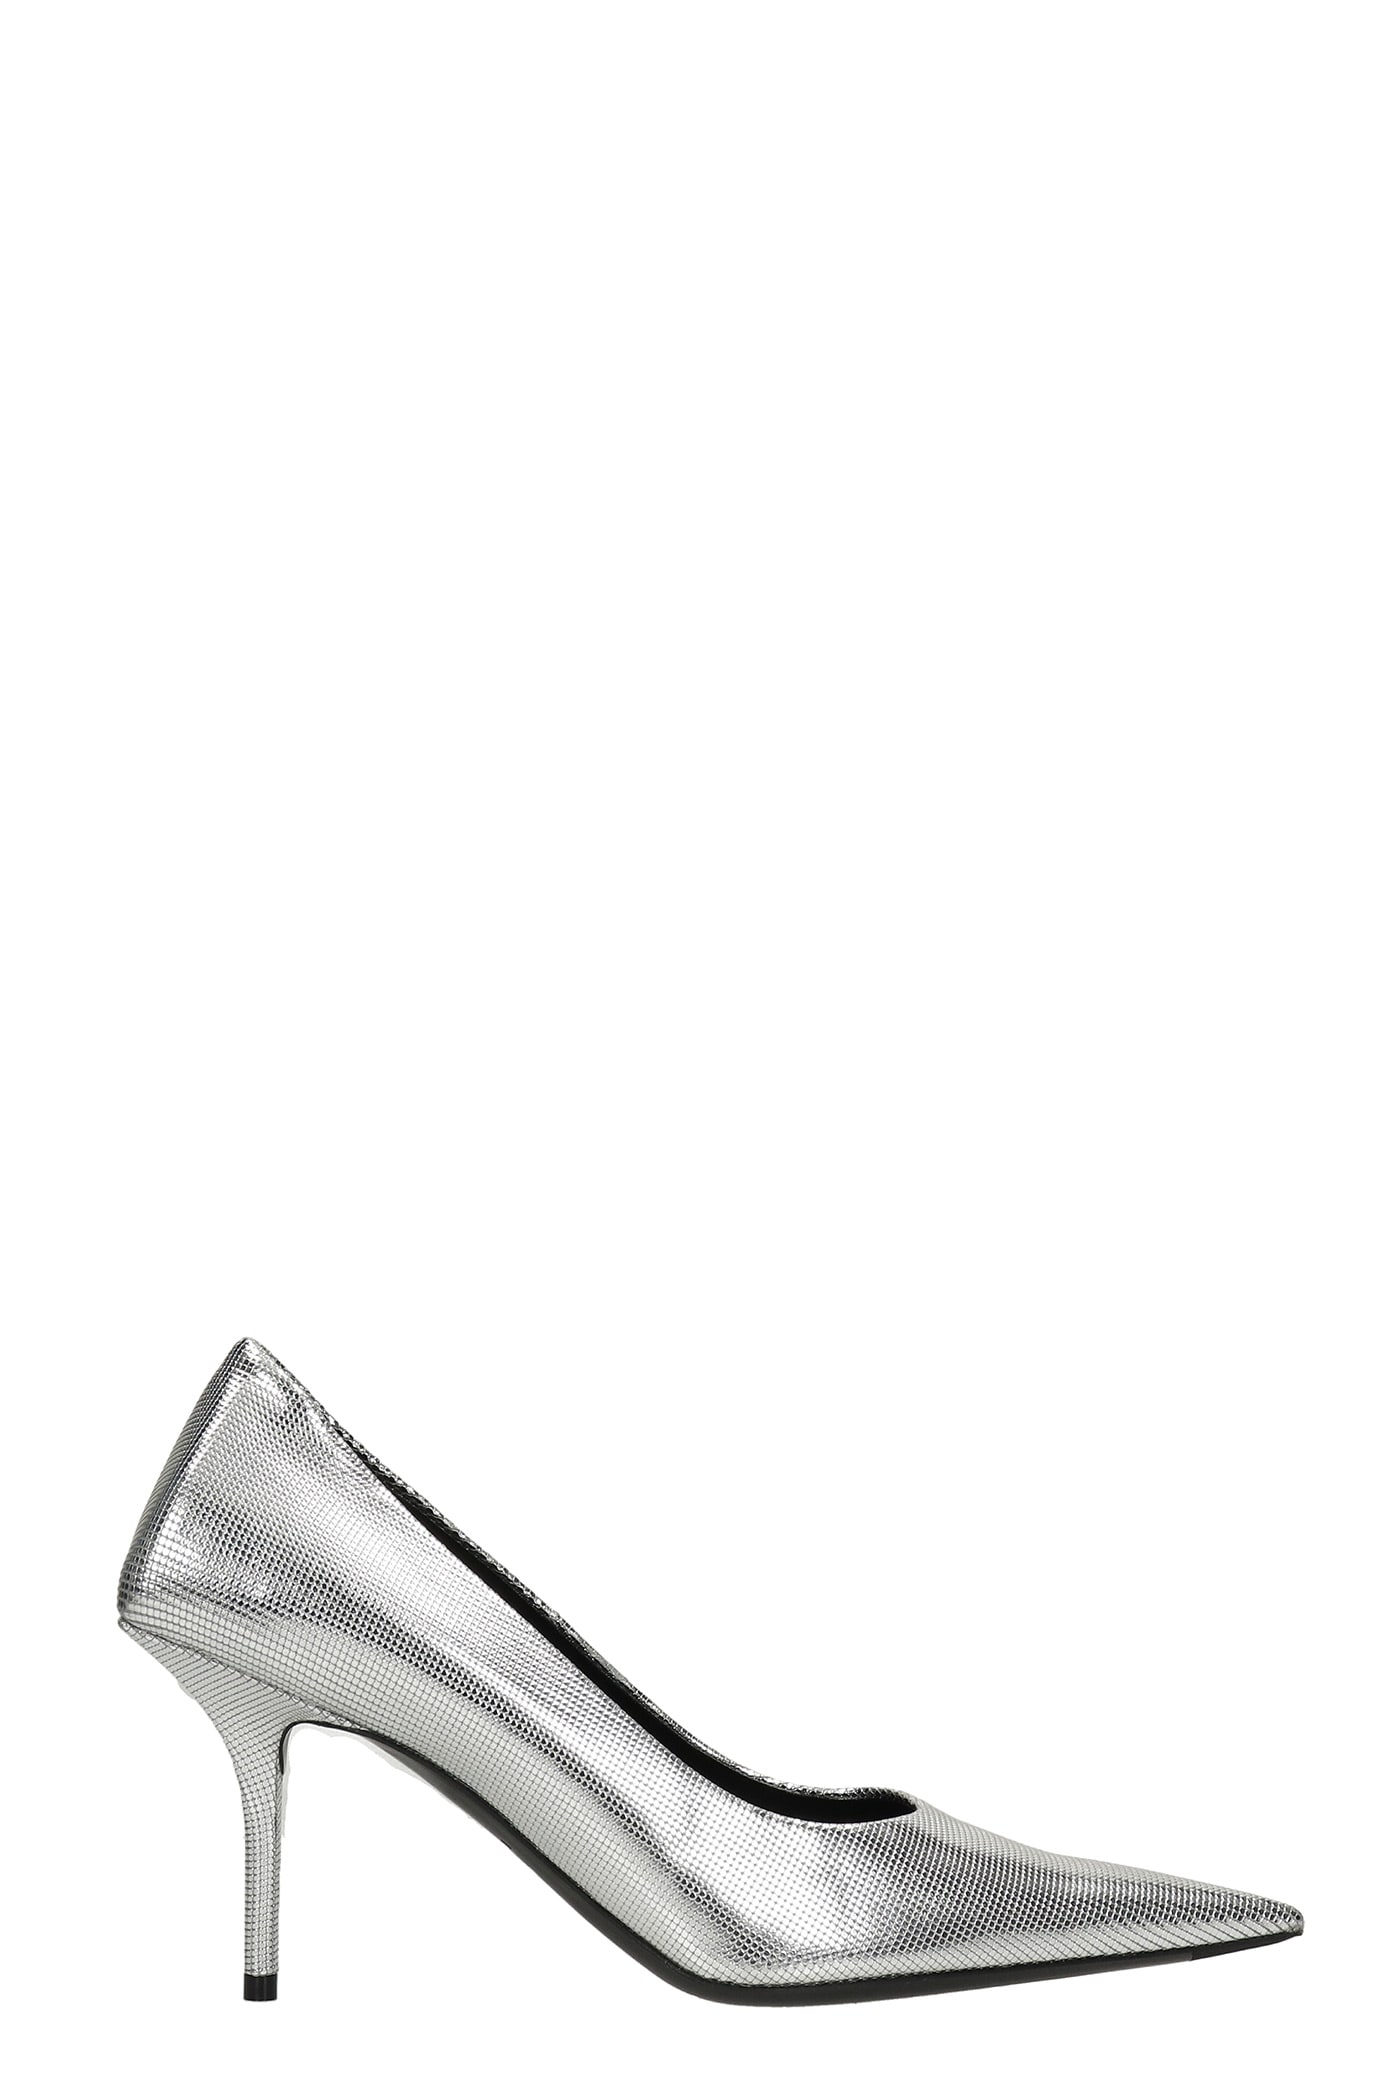 Balenciaga Pump Pumps In Silver Leather